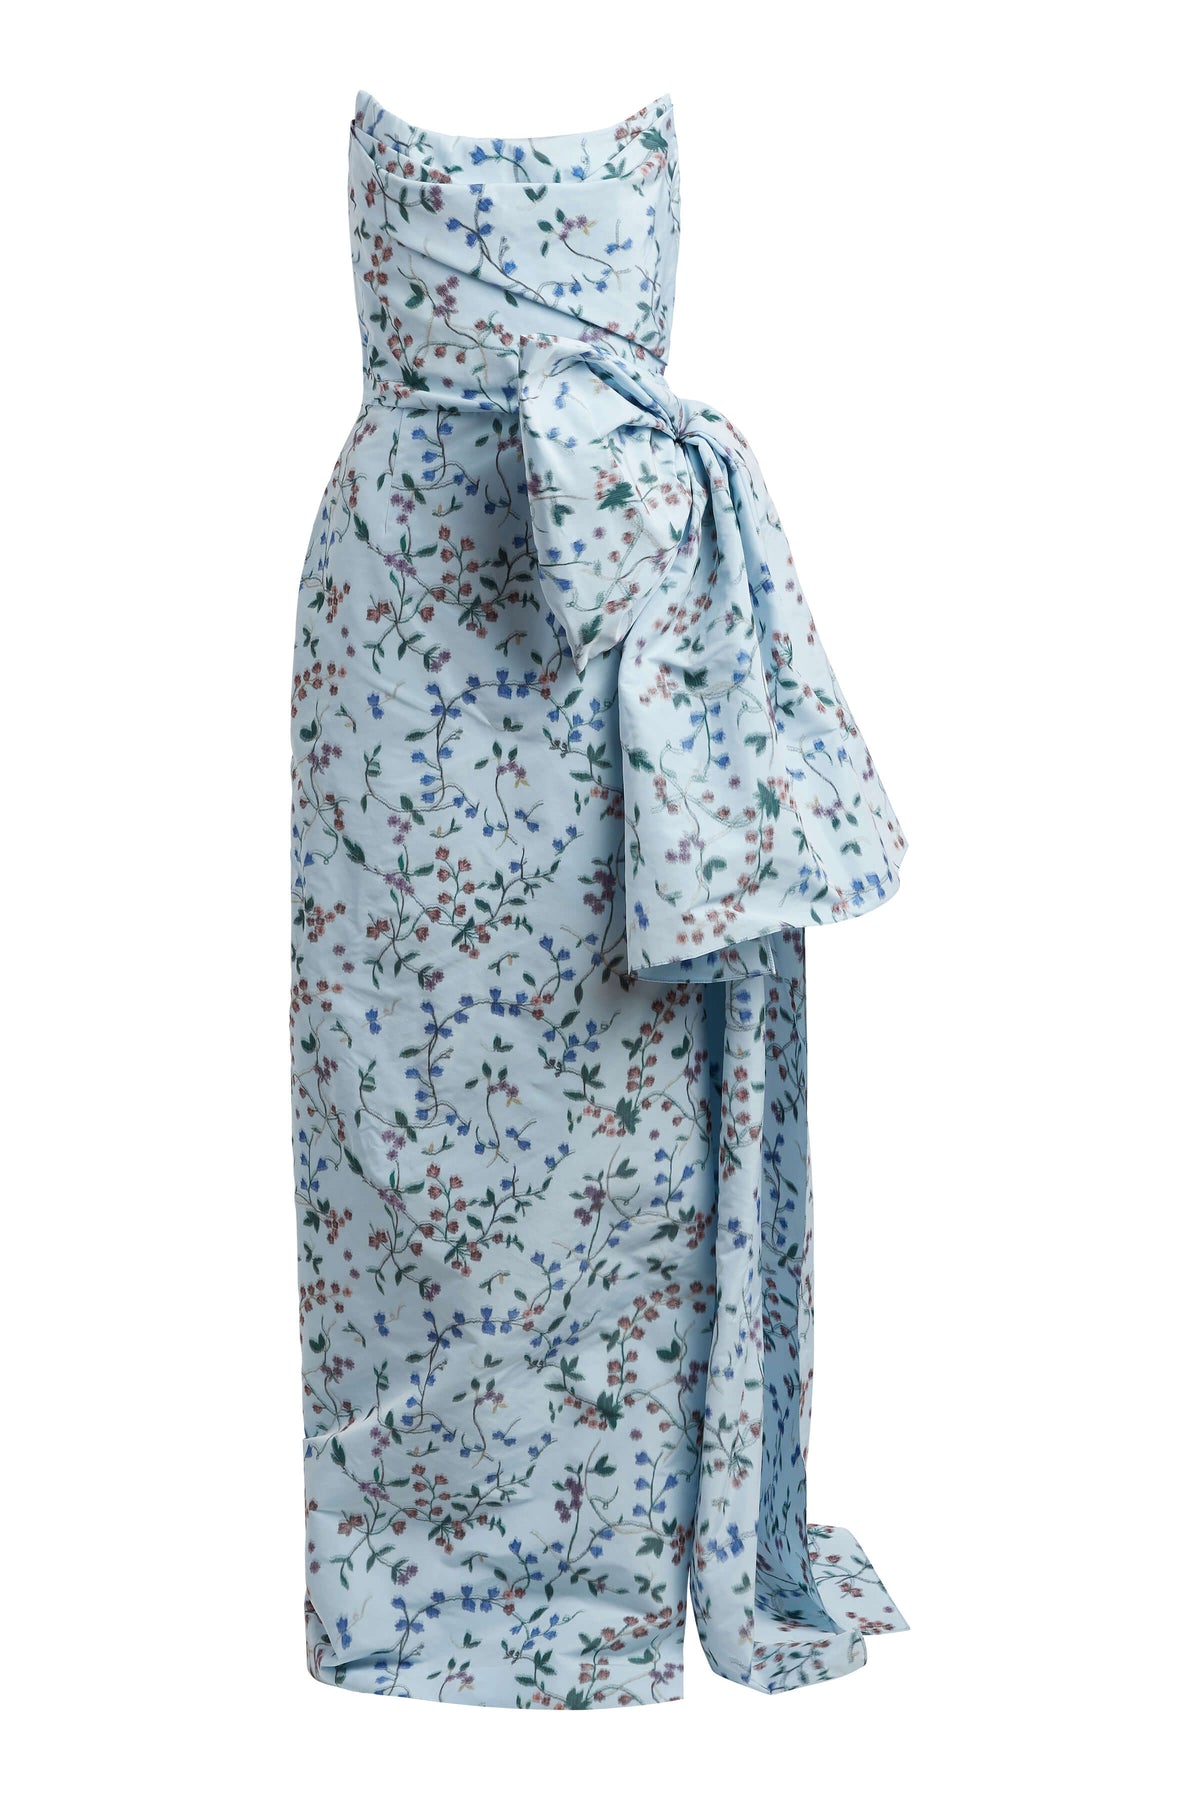 Athena Blue Vine Ikat Strapless Draped Bodice Gown